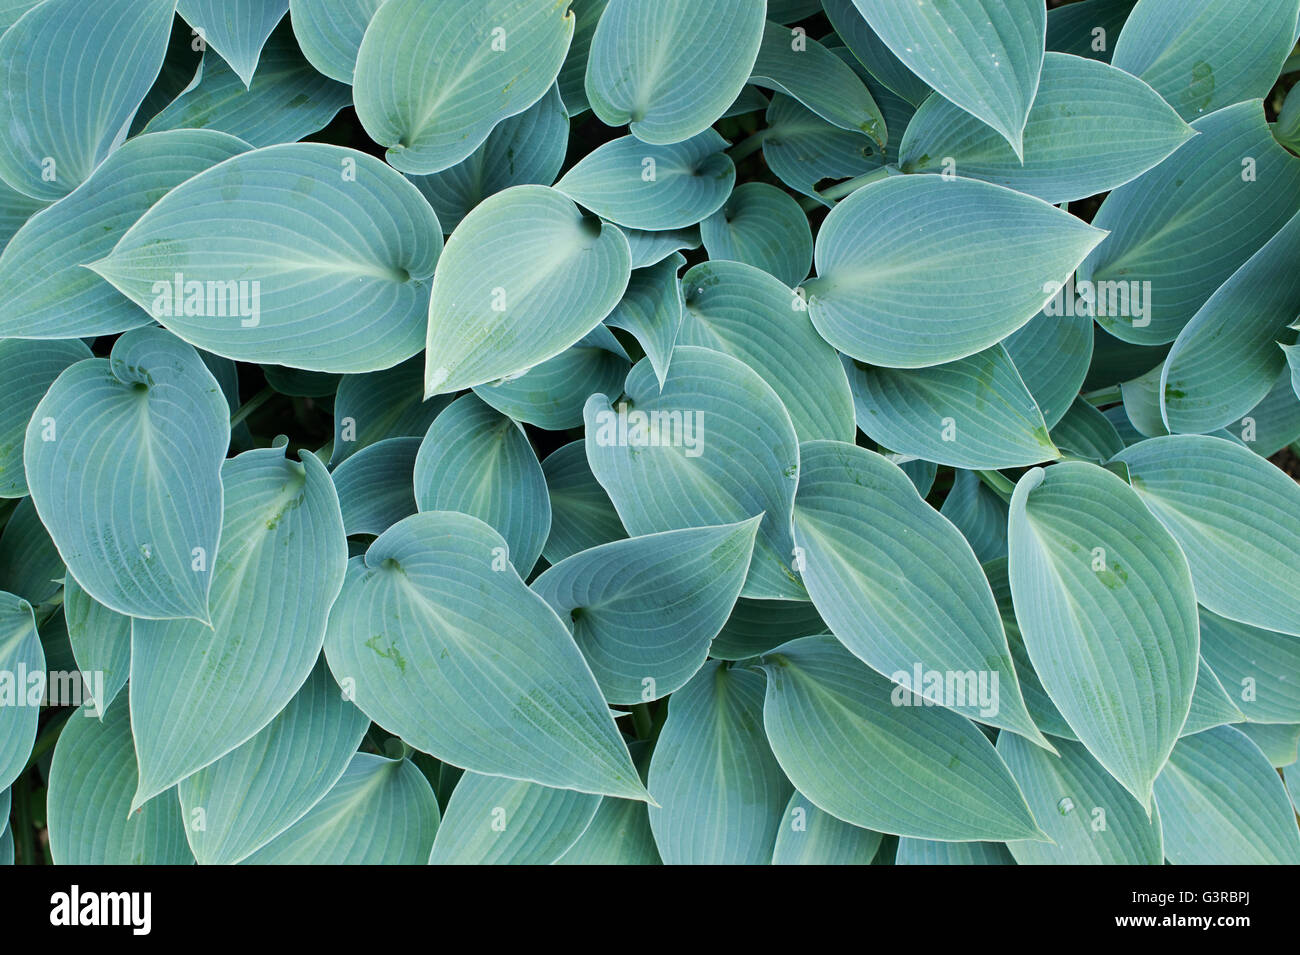 Hosta Halcyon leaves pattern Stock Photo